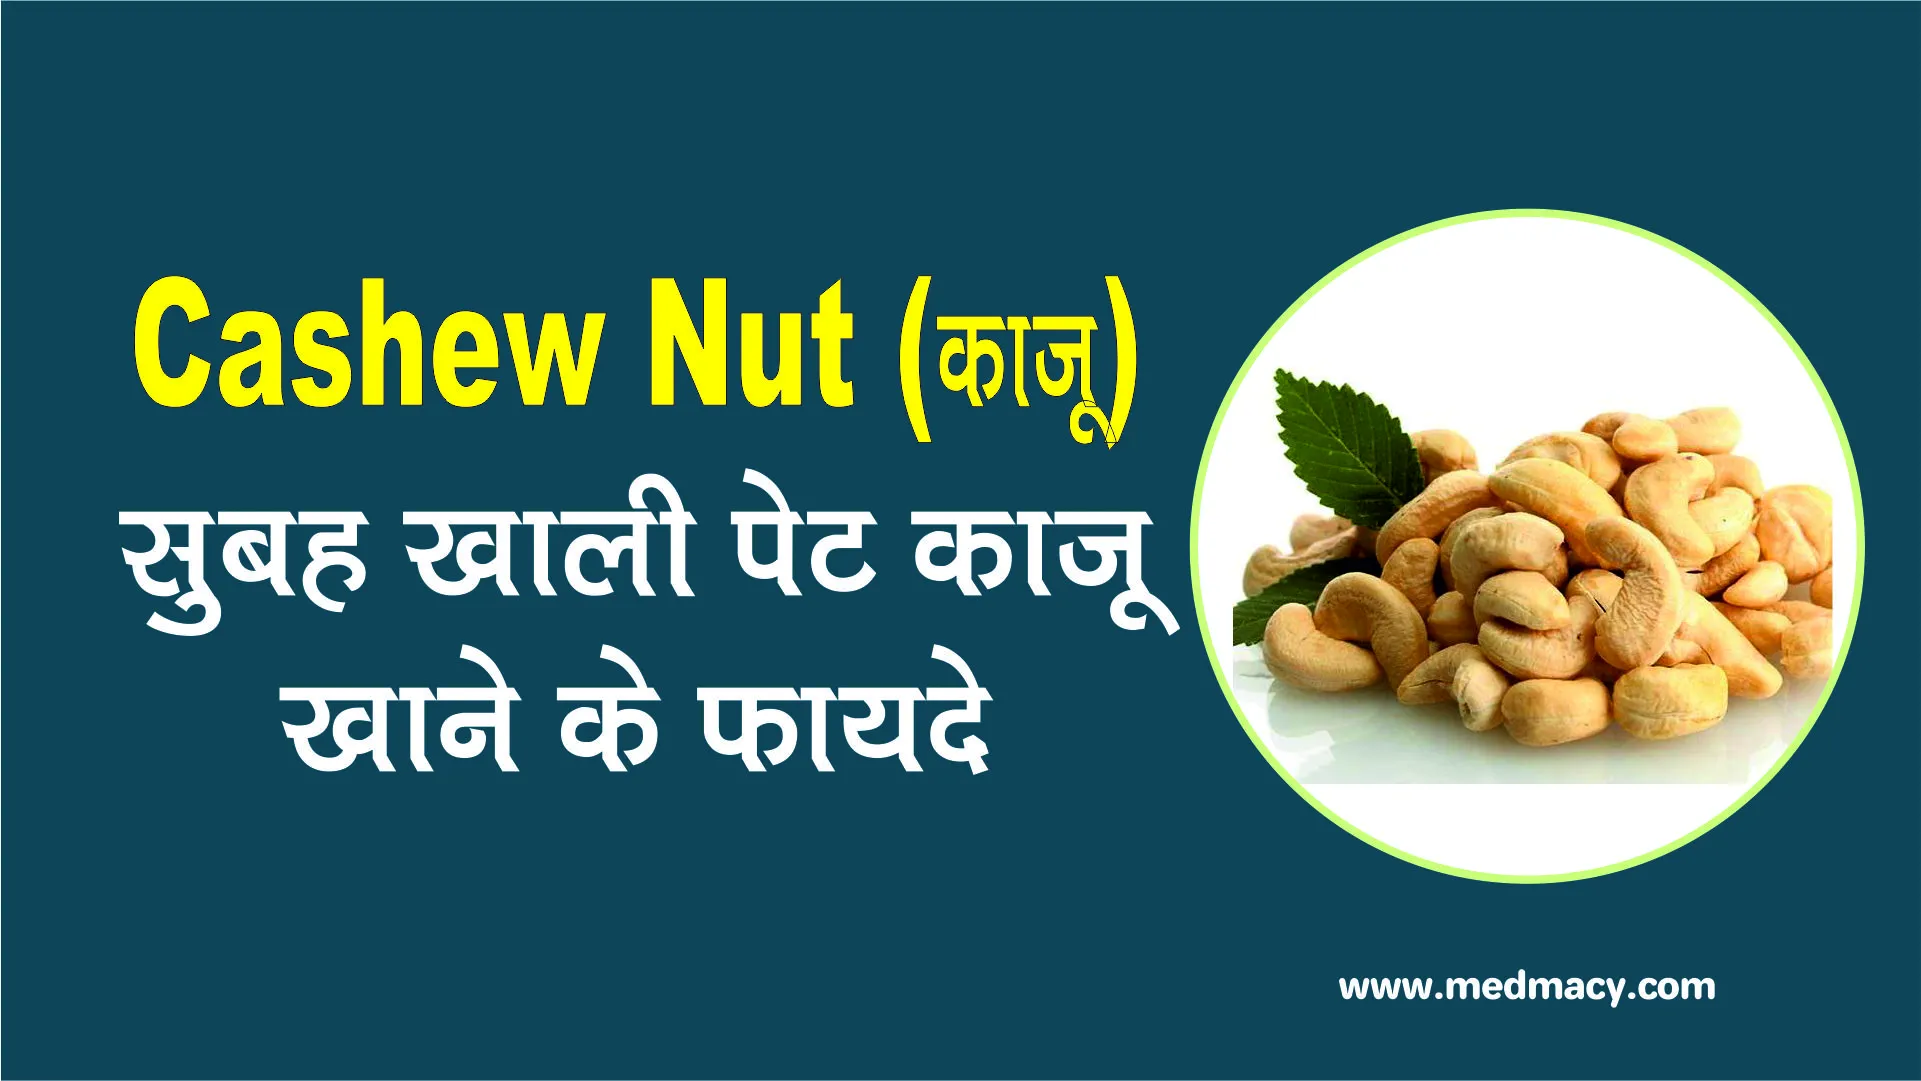 Cashew Nuts Benefits in Hindi